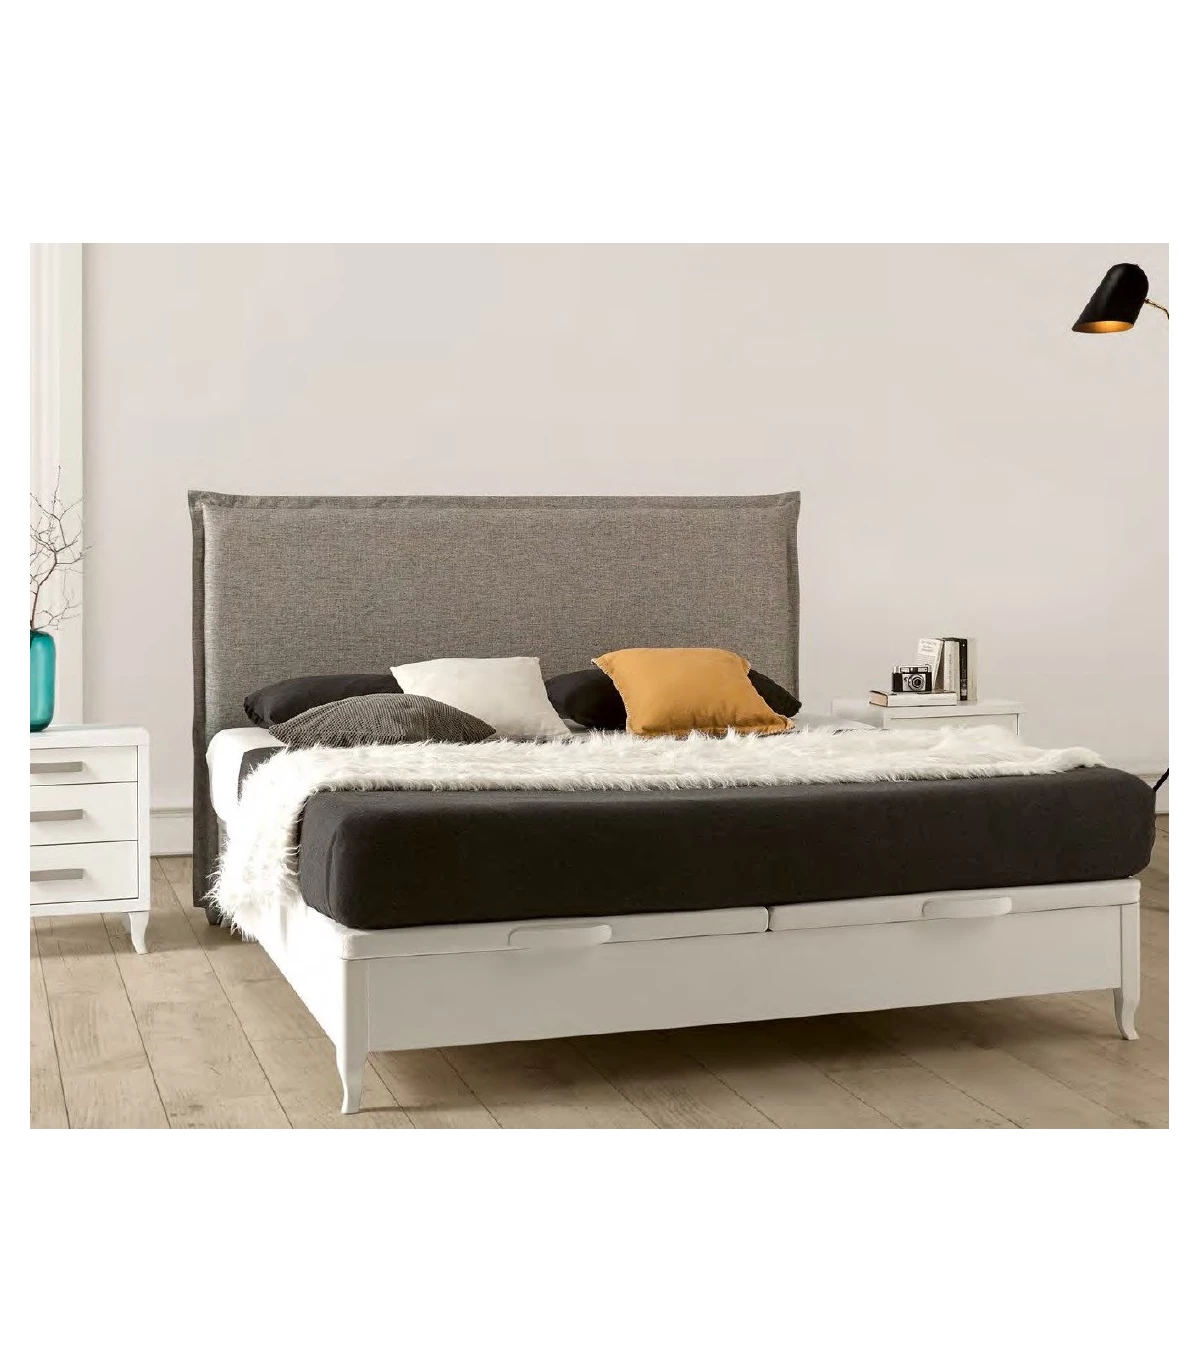  Sofá cama tamaño individual XL con 2 camas nido, cama